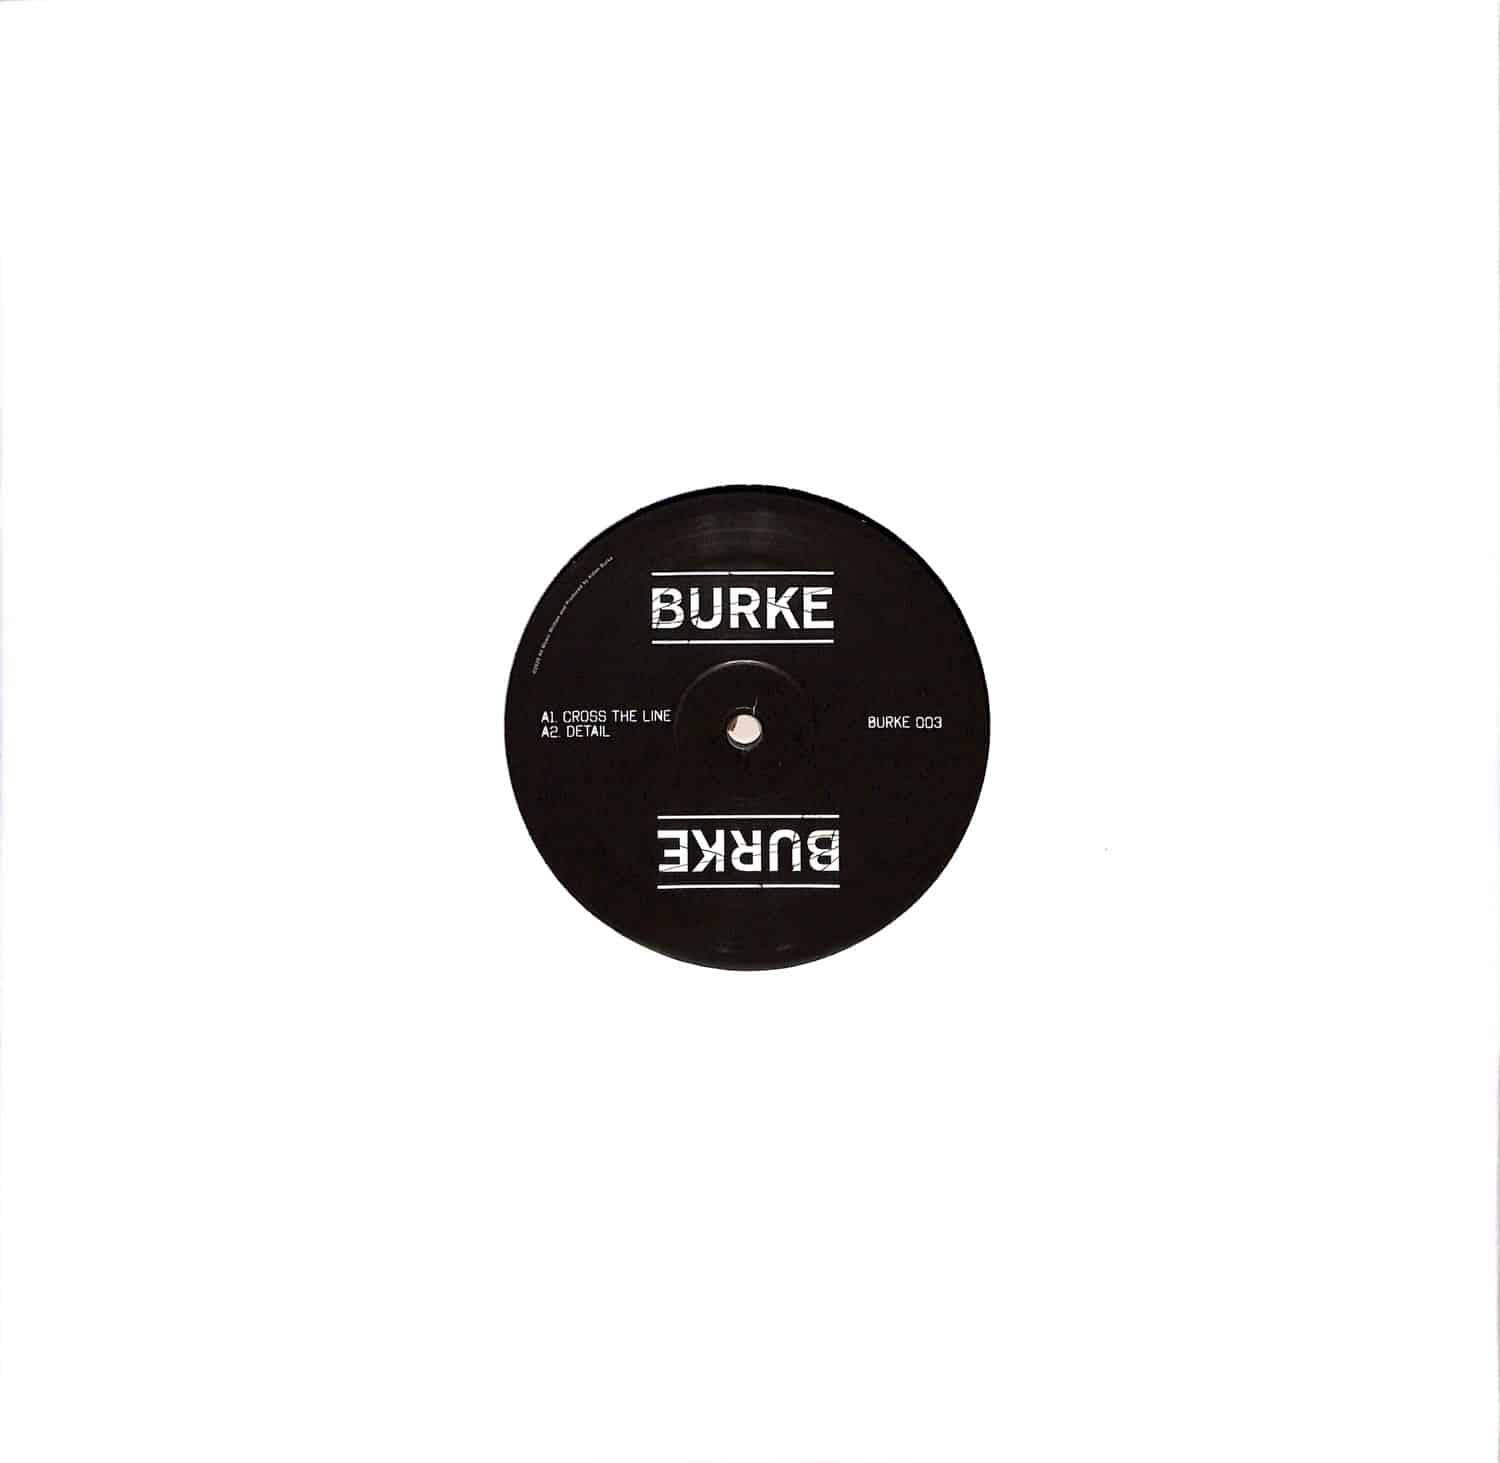 Burke - CROSS THE LINE